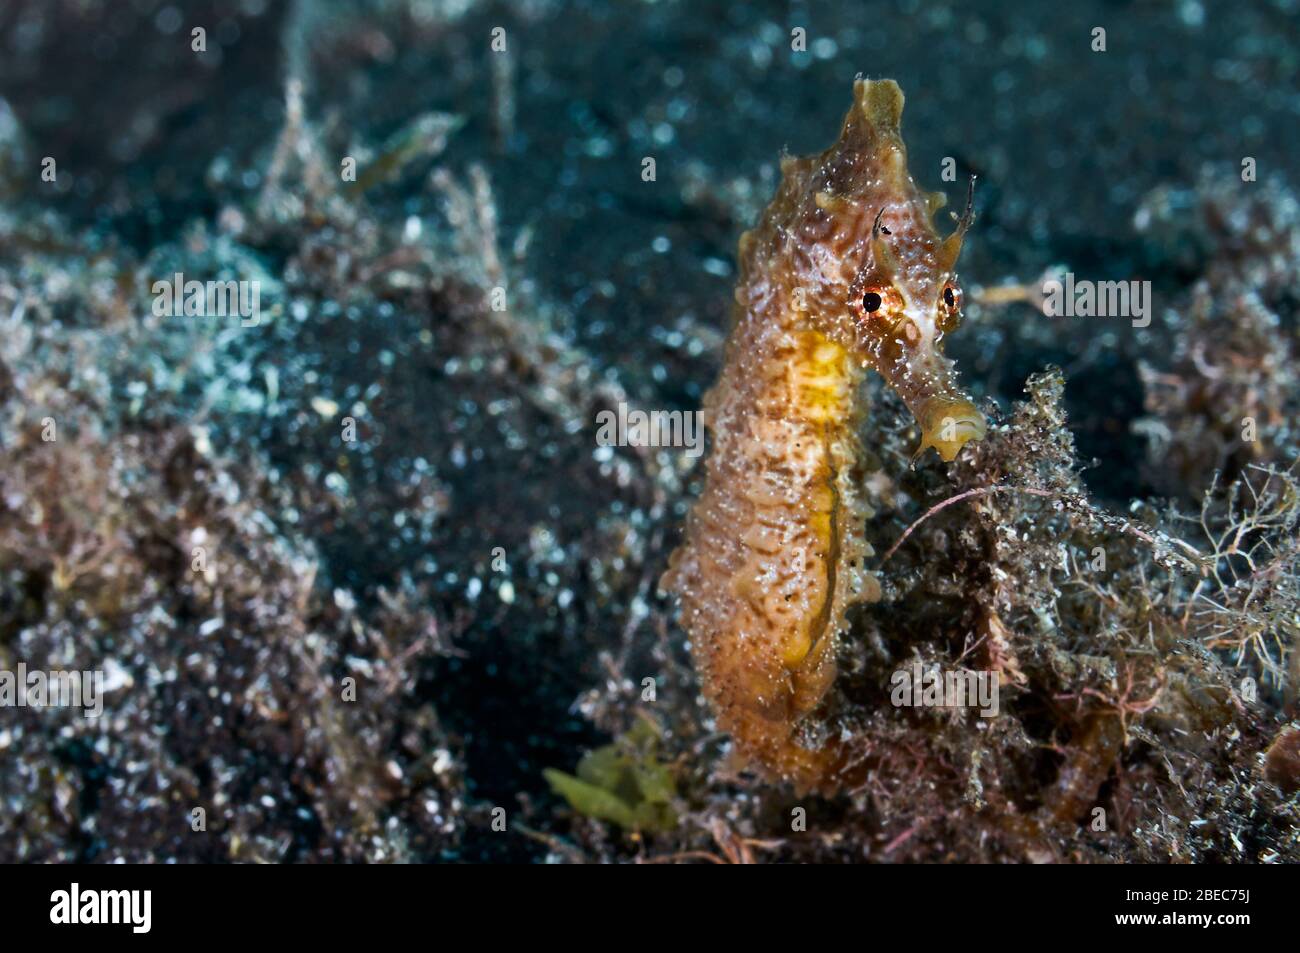 Short-snouted seahorse (Hippocampus hippocampus) underwater close-up fish portrait (Puerto Naos, La Palma, Canary Islands, Atlantic sea, Spain) Stock Photo